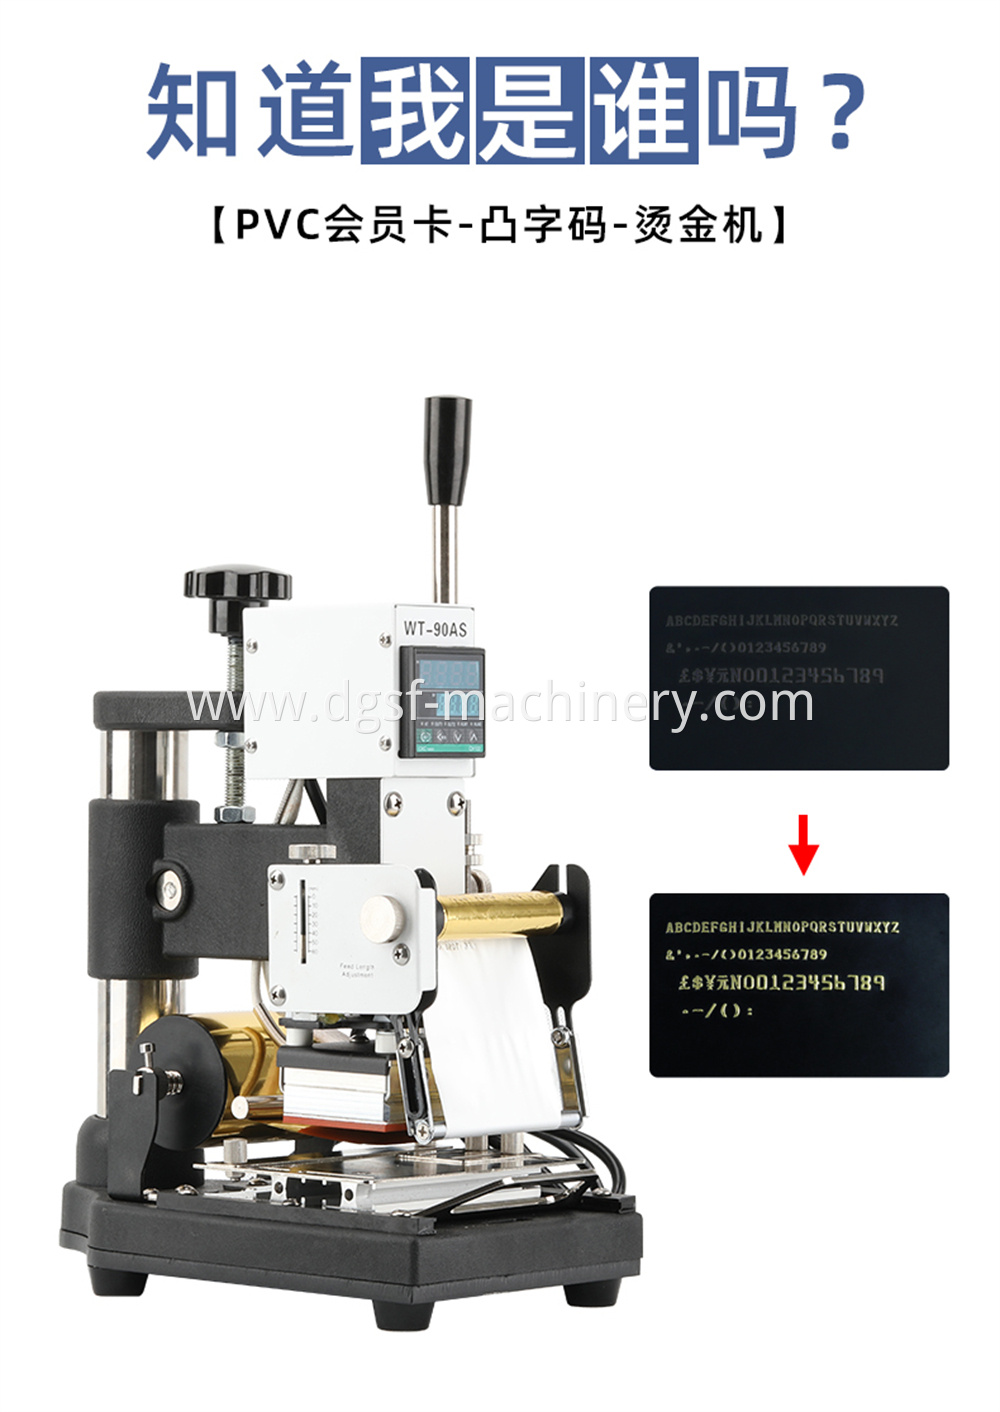 Multifunctional Stamping Machine 3 Jpg